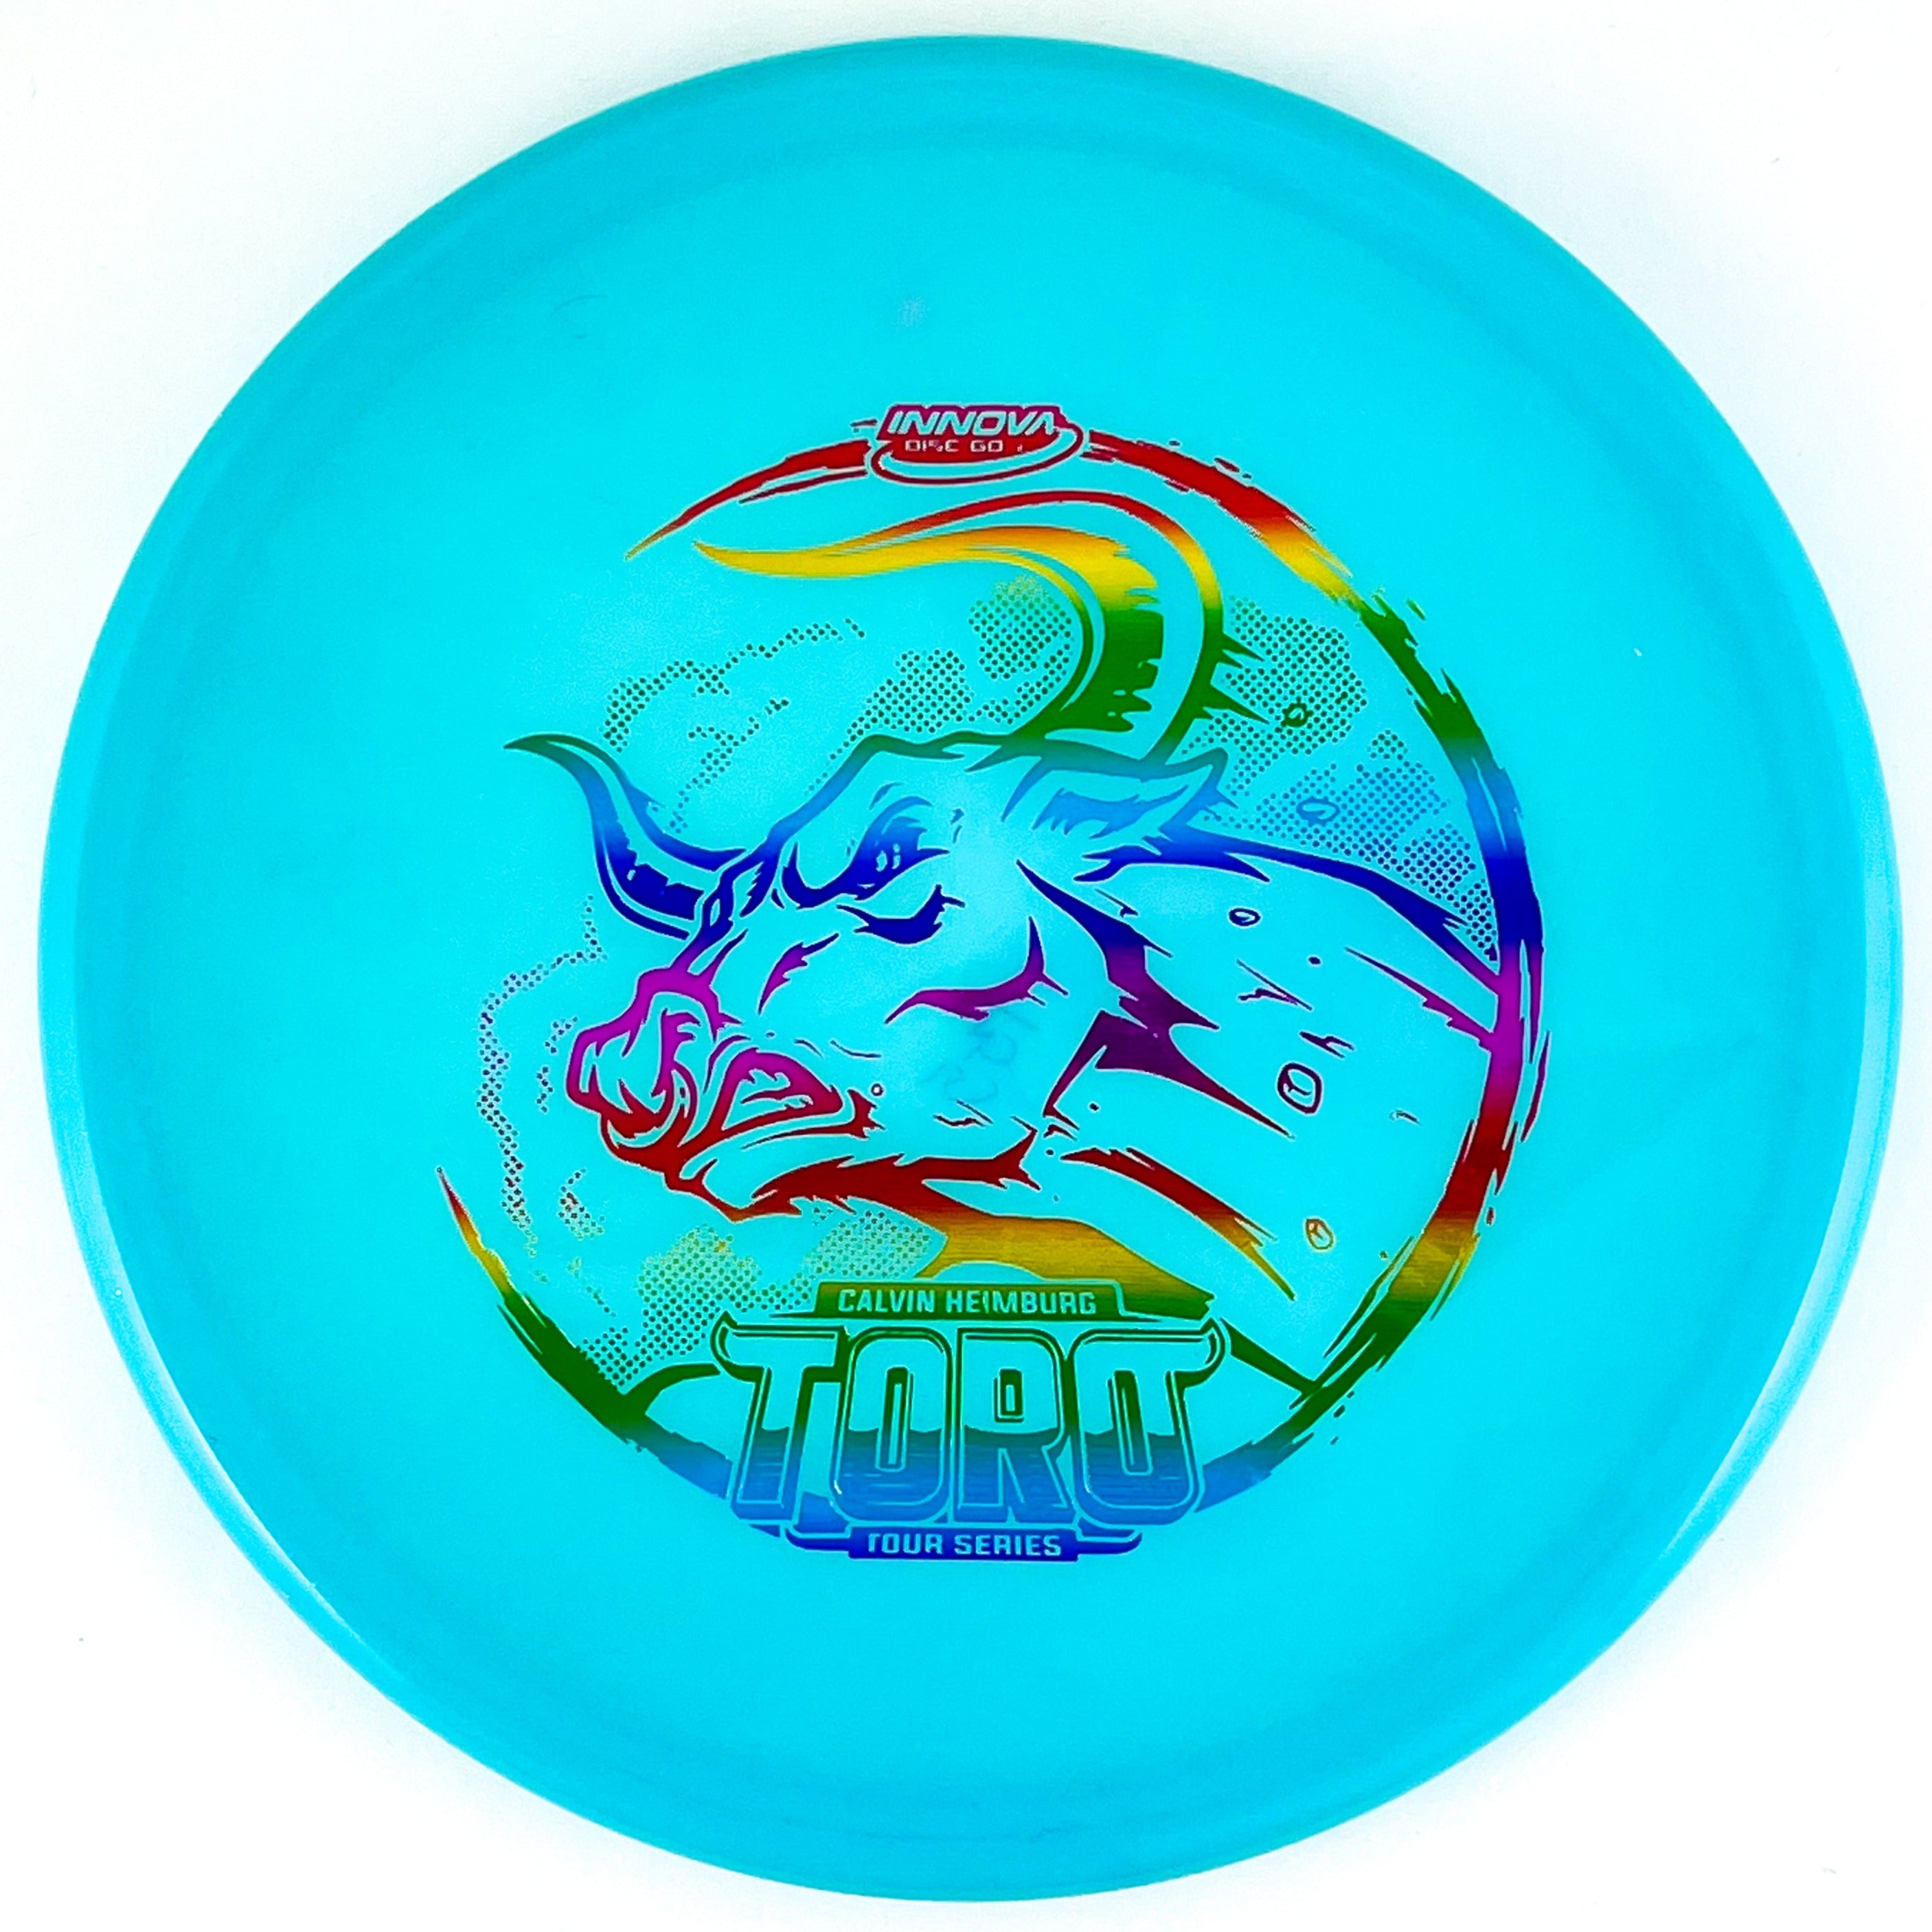 2022 Calvin Heimburg Colour Glow Toro disc golf putt and approach disc by Innova Champion Discs.